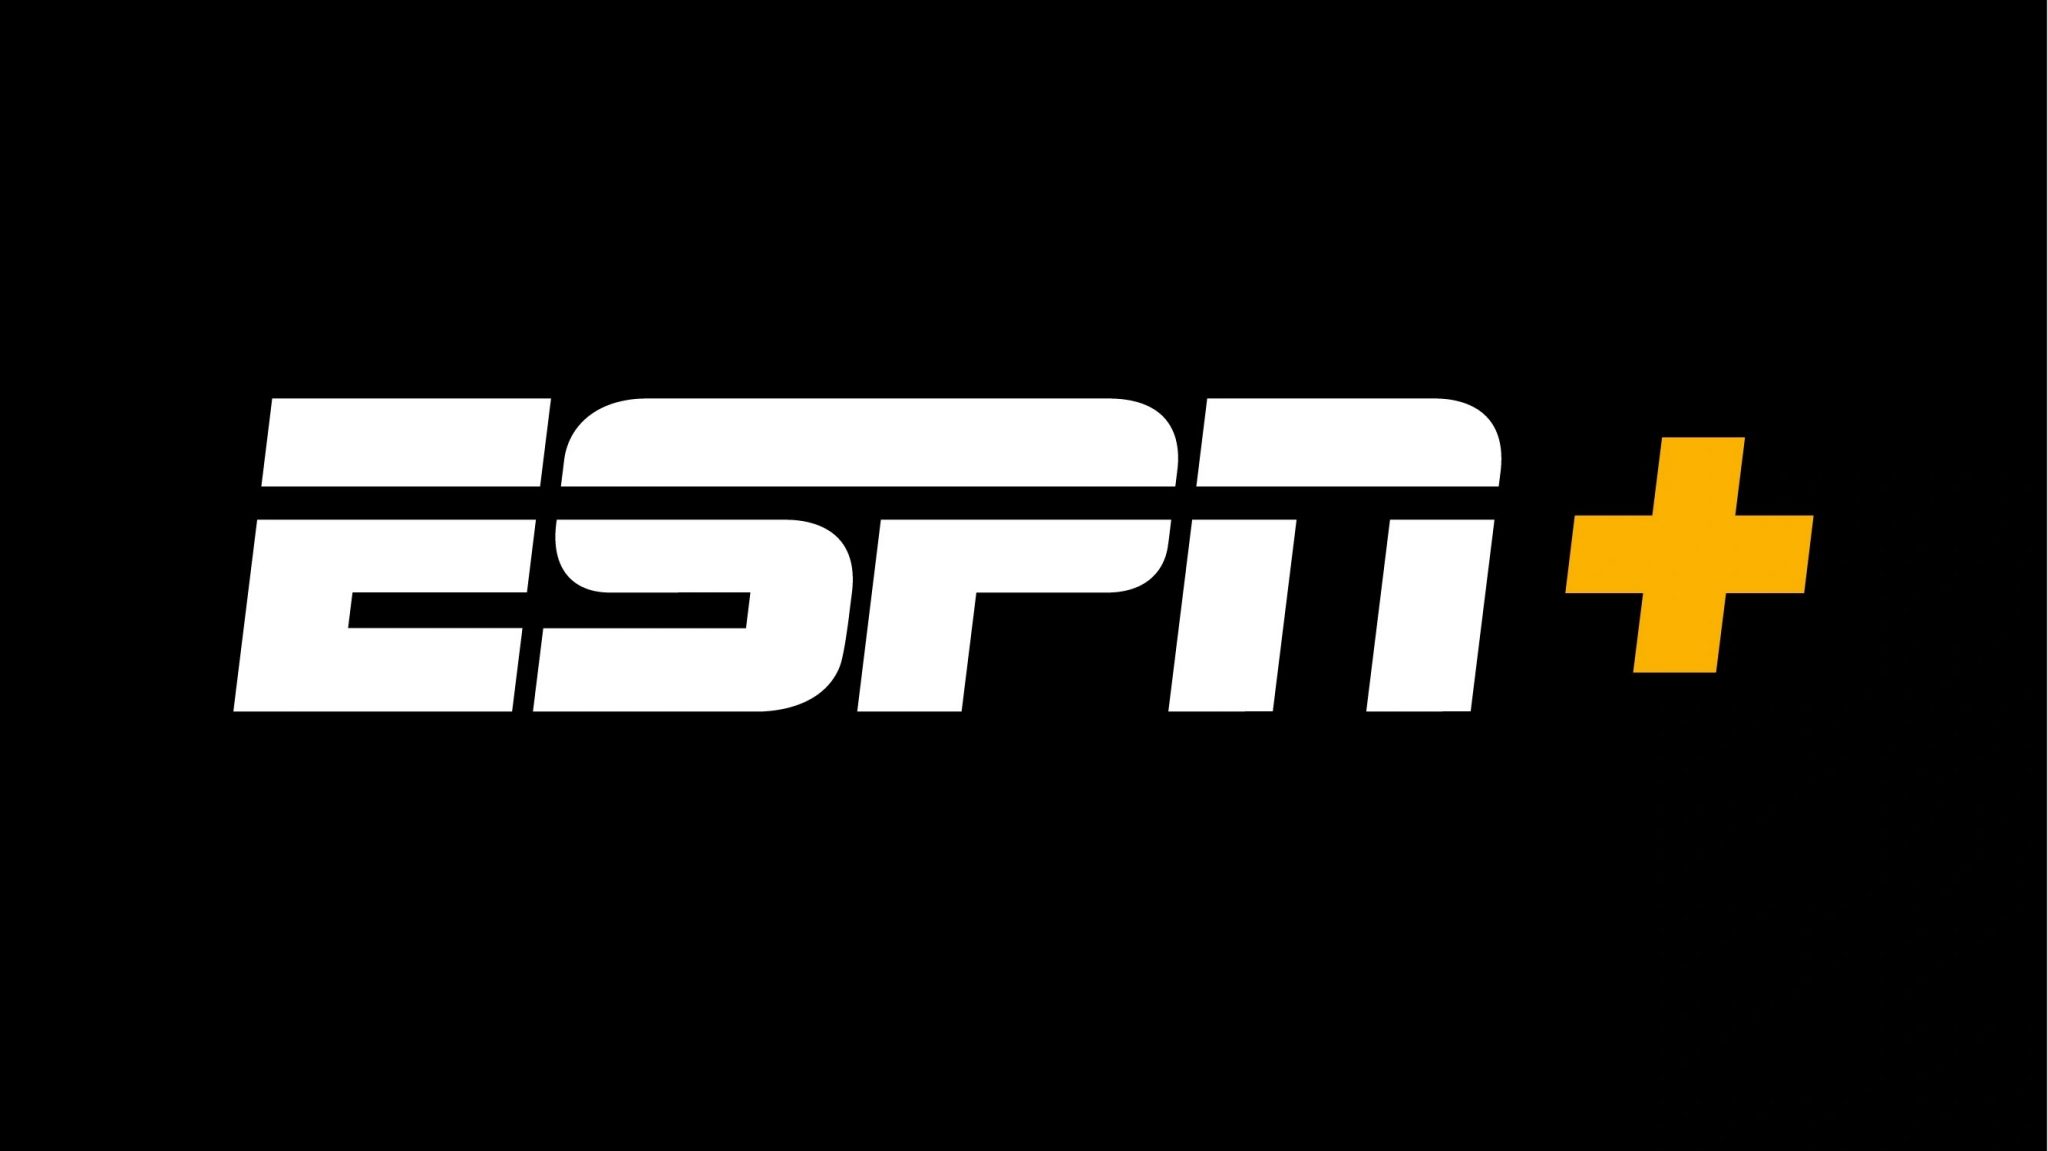 Disney close to DraftKings-ESPN tie-up - Digital TV Europe